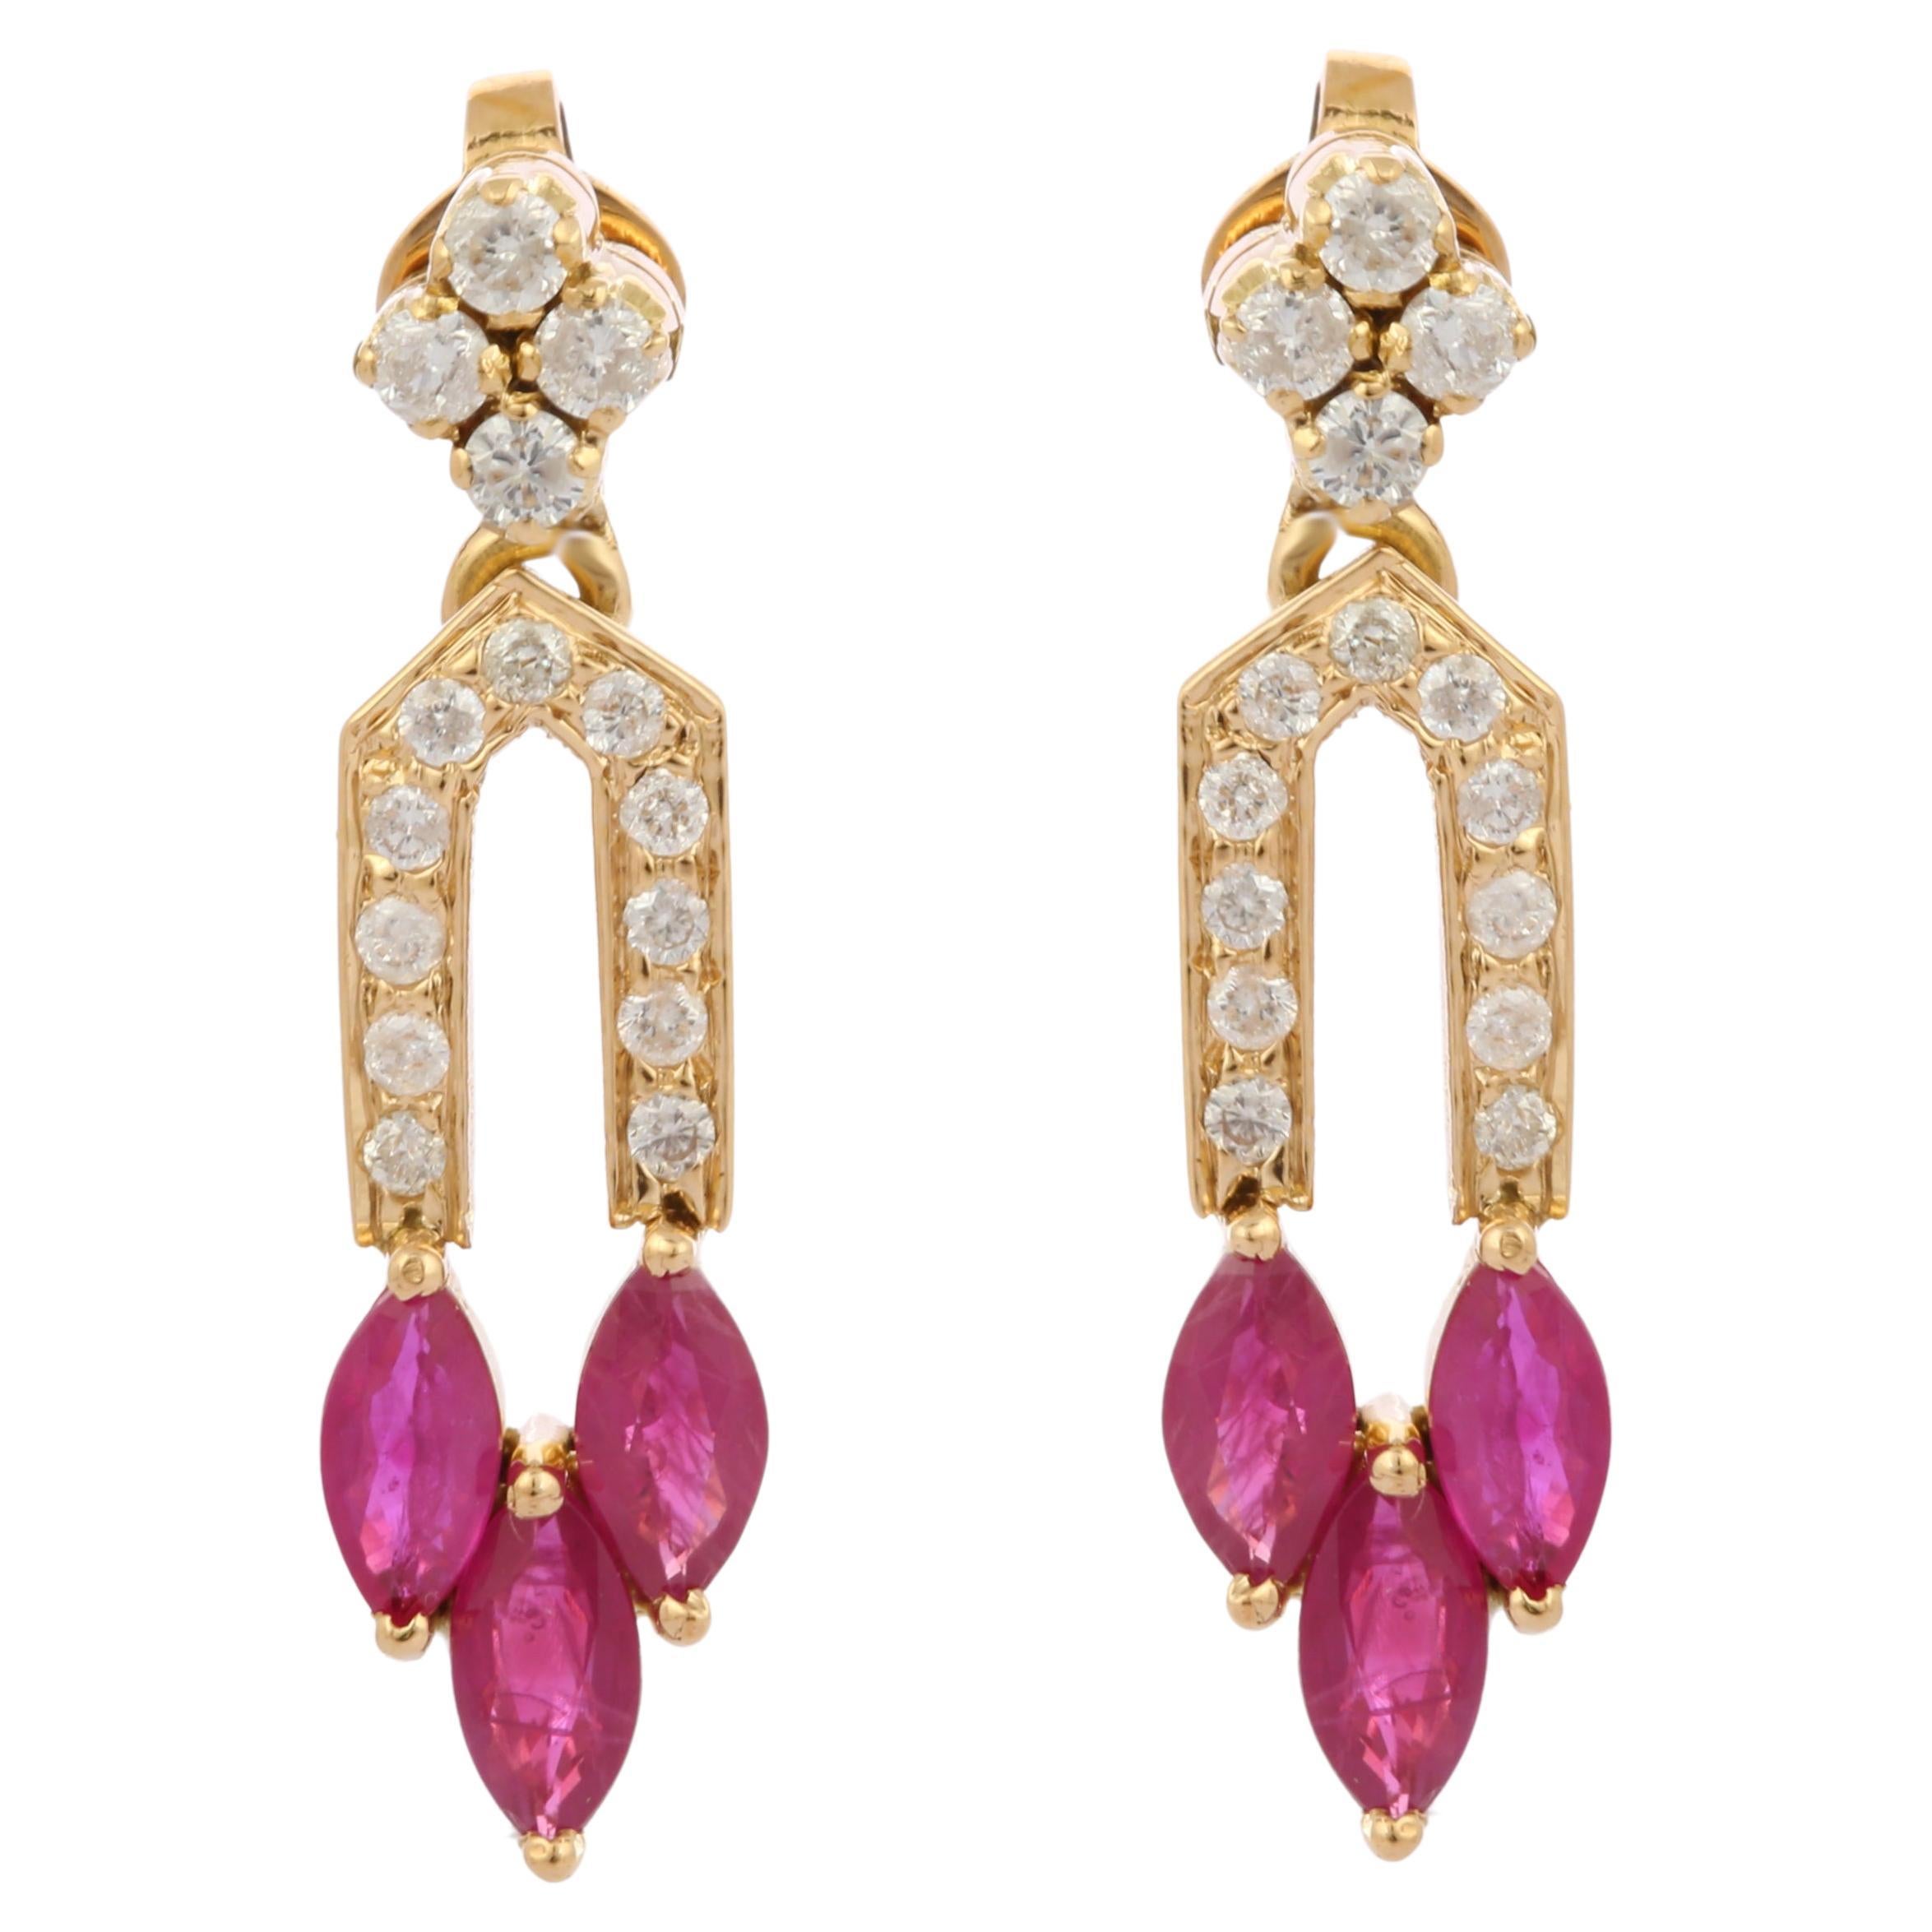 18K Yellow Gold Marquise Cut Ruby and Diamond Wedding Dangle Earrings